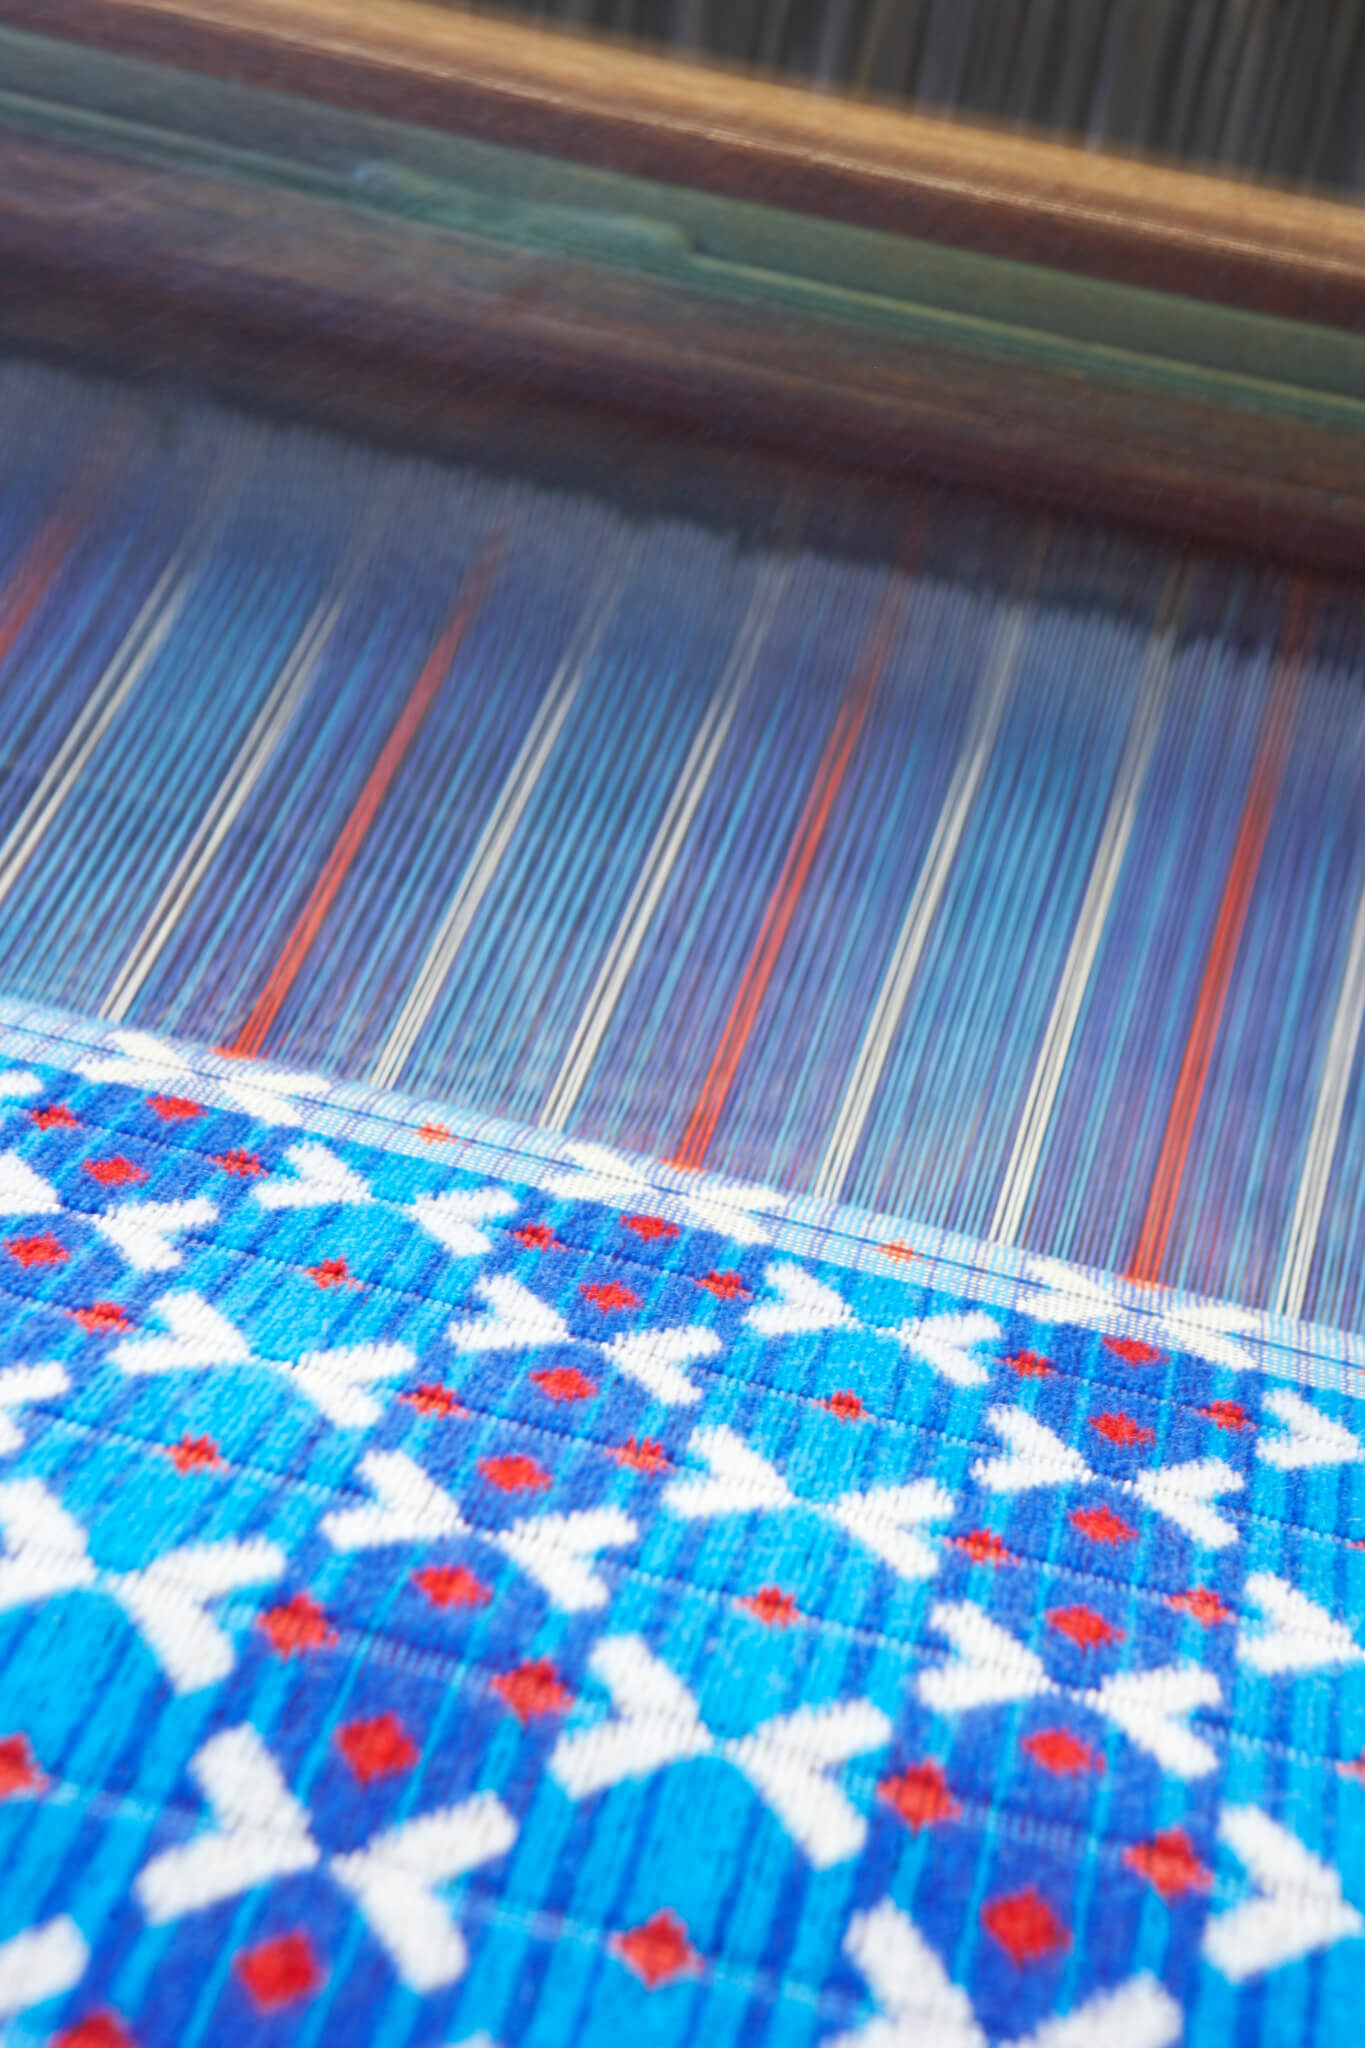 Fabric in loom